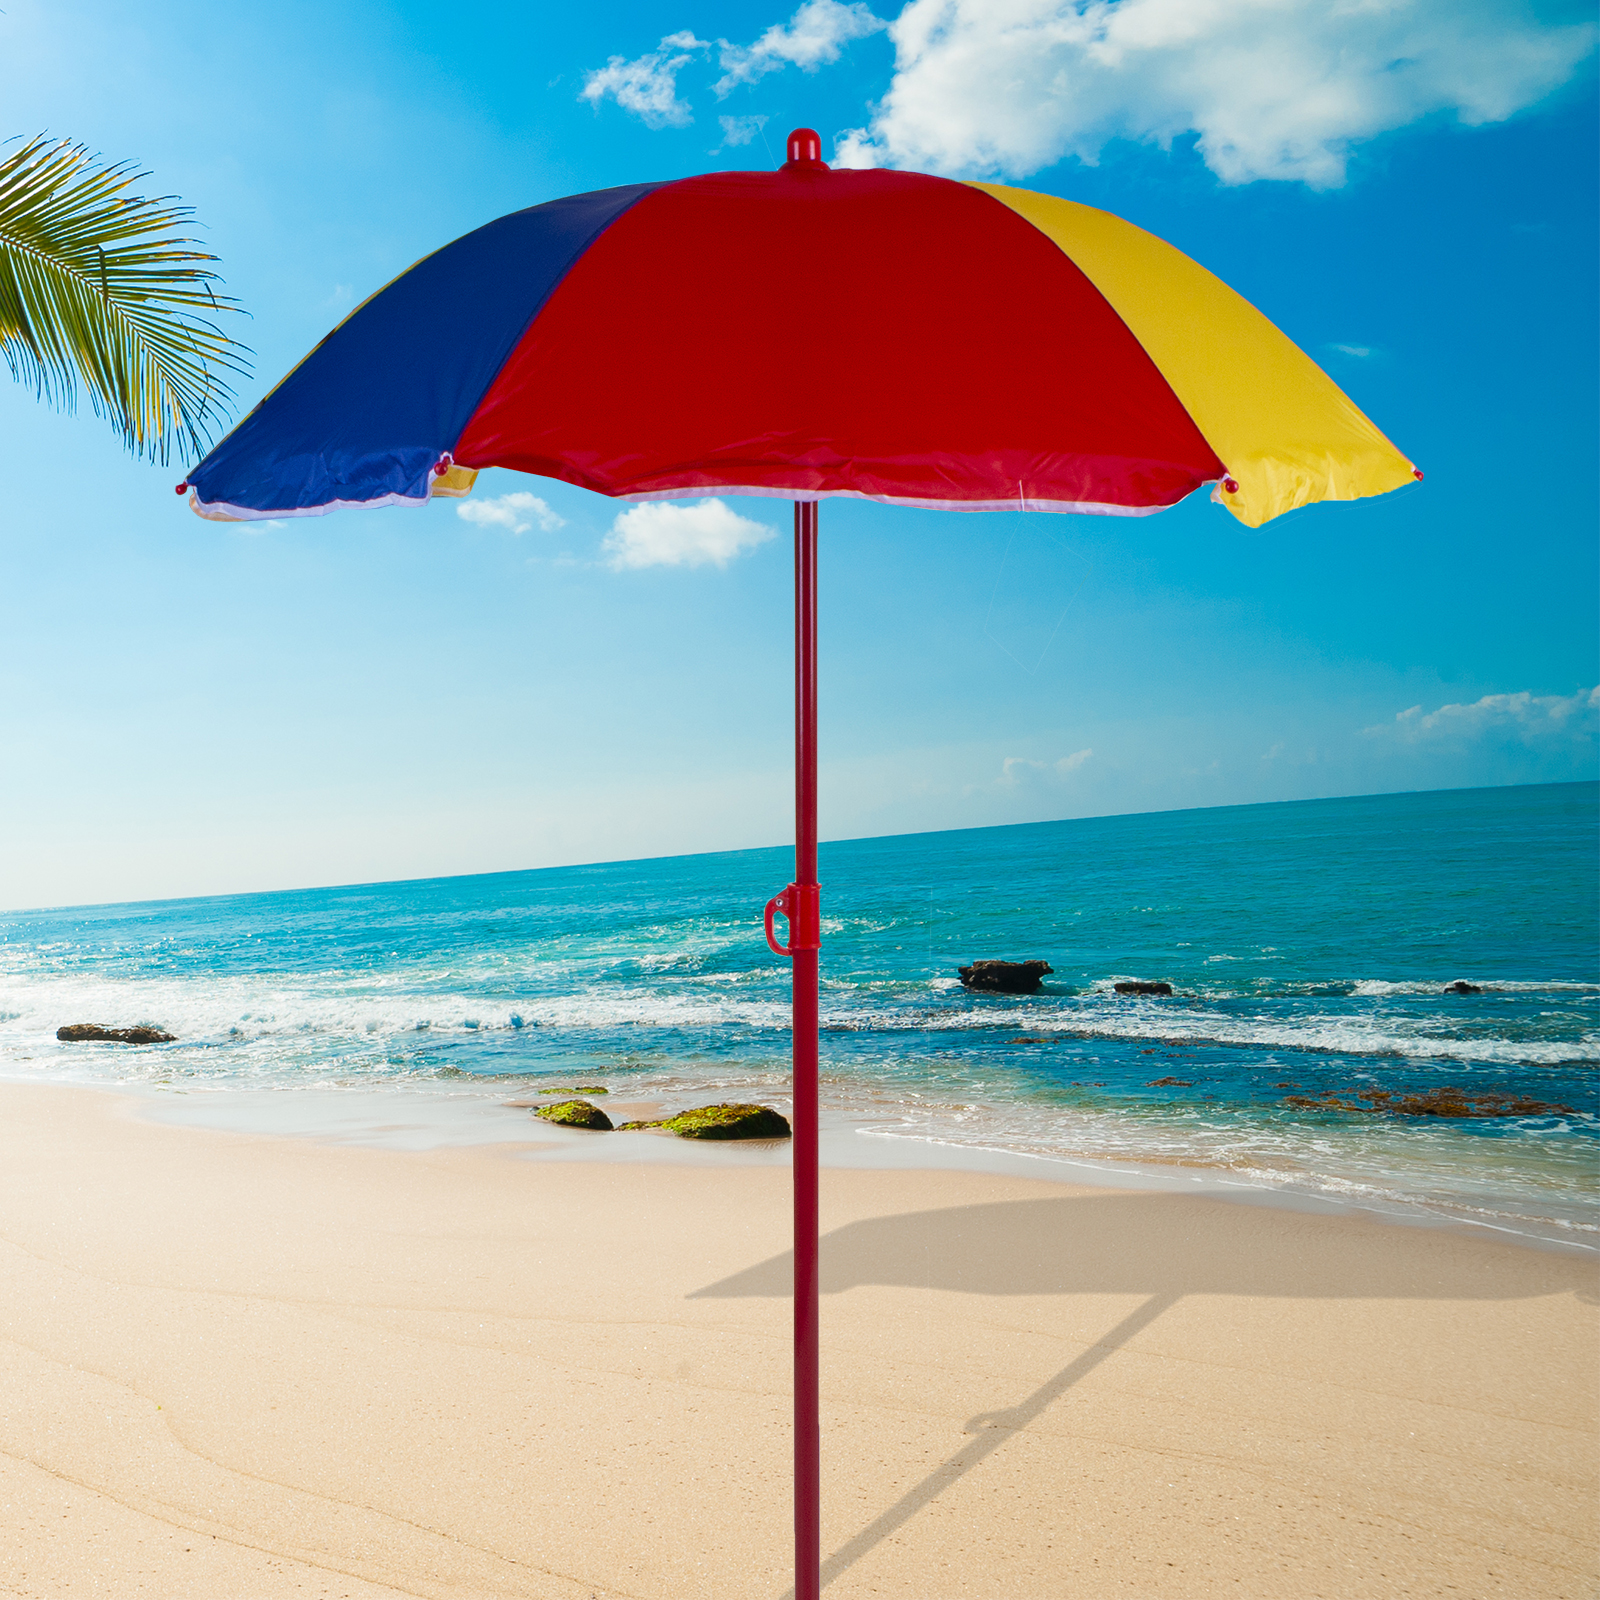 Creatice Beach Chair With Sun Umbrella with Simple Decor